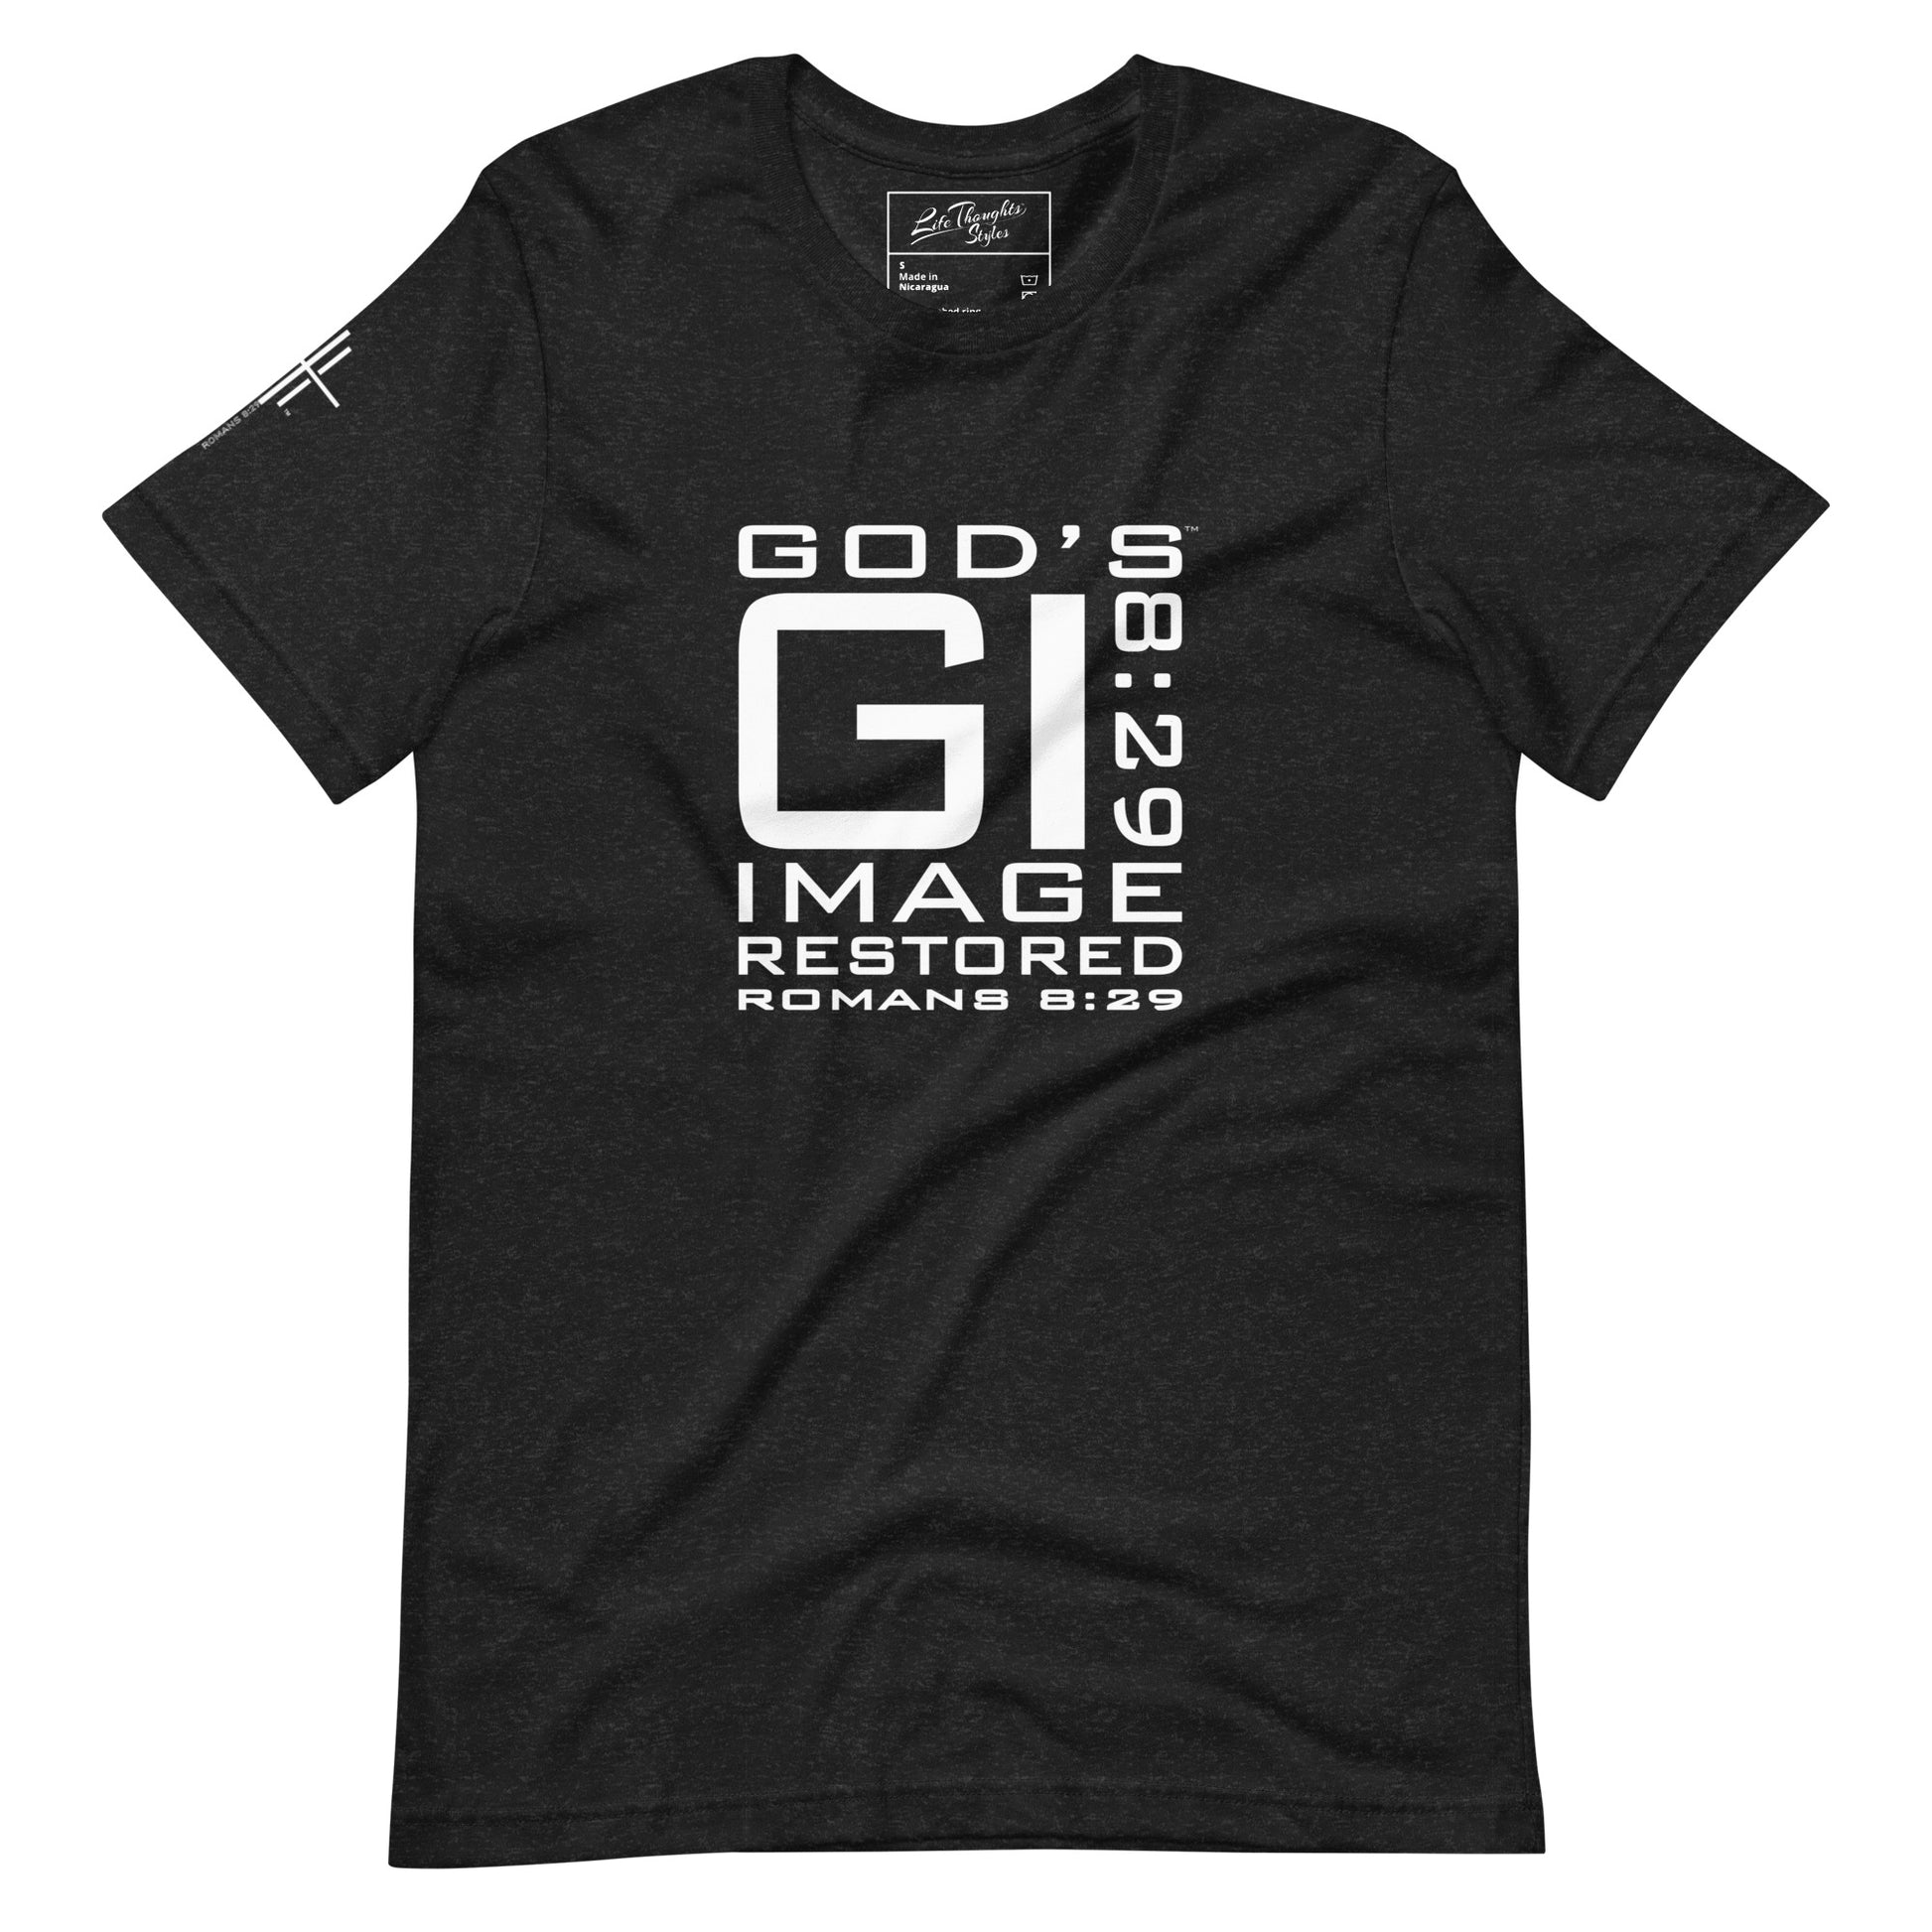 GI 8 29 God's Image Restored square tee black front